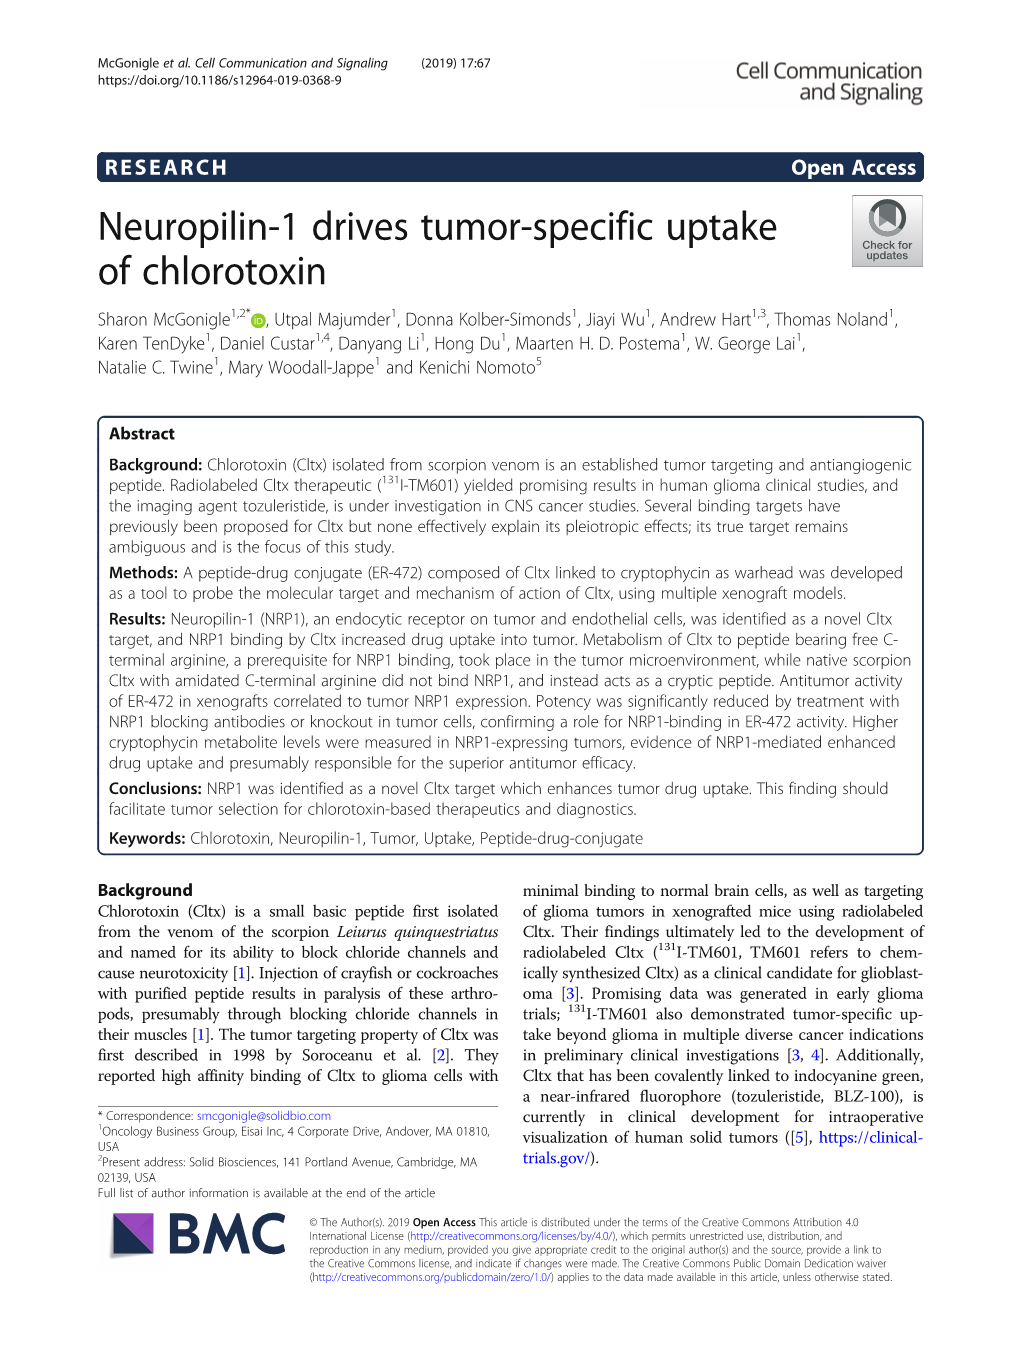 Neuropilin-1 Drives Tumor-Specific Uptake of Chlorotoxin